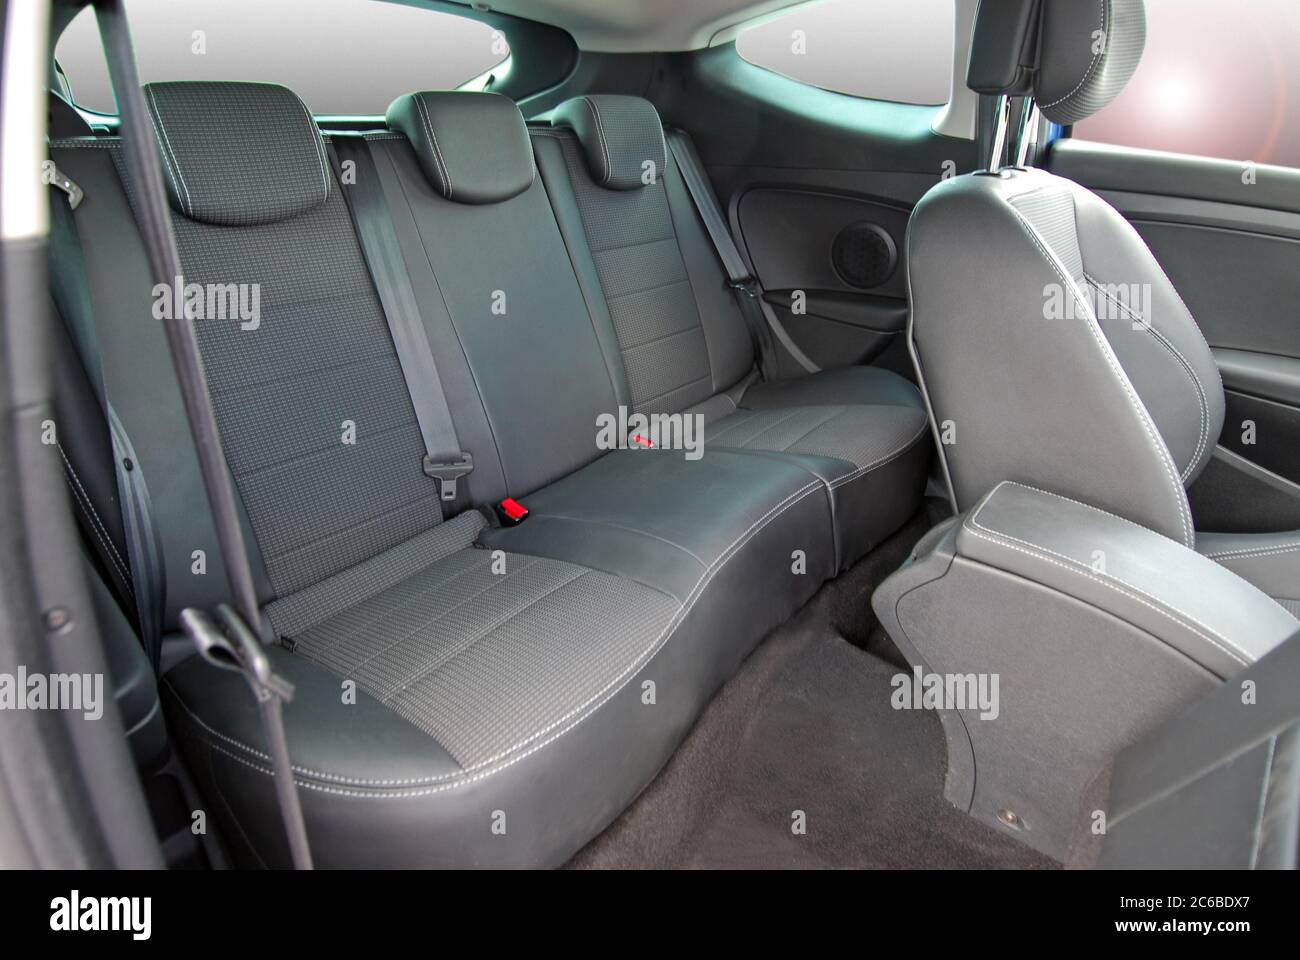 rear car seat, car interior, black rear seat in the passinger car Stock Photo